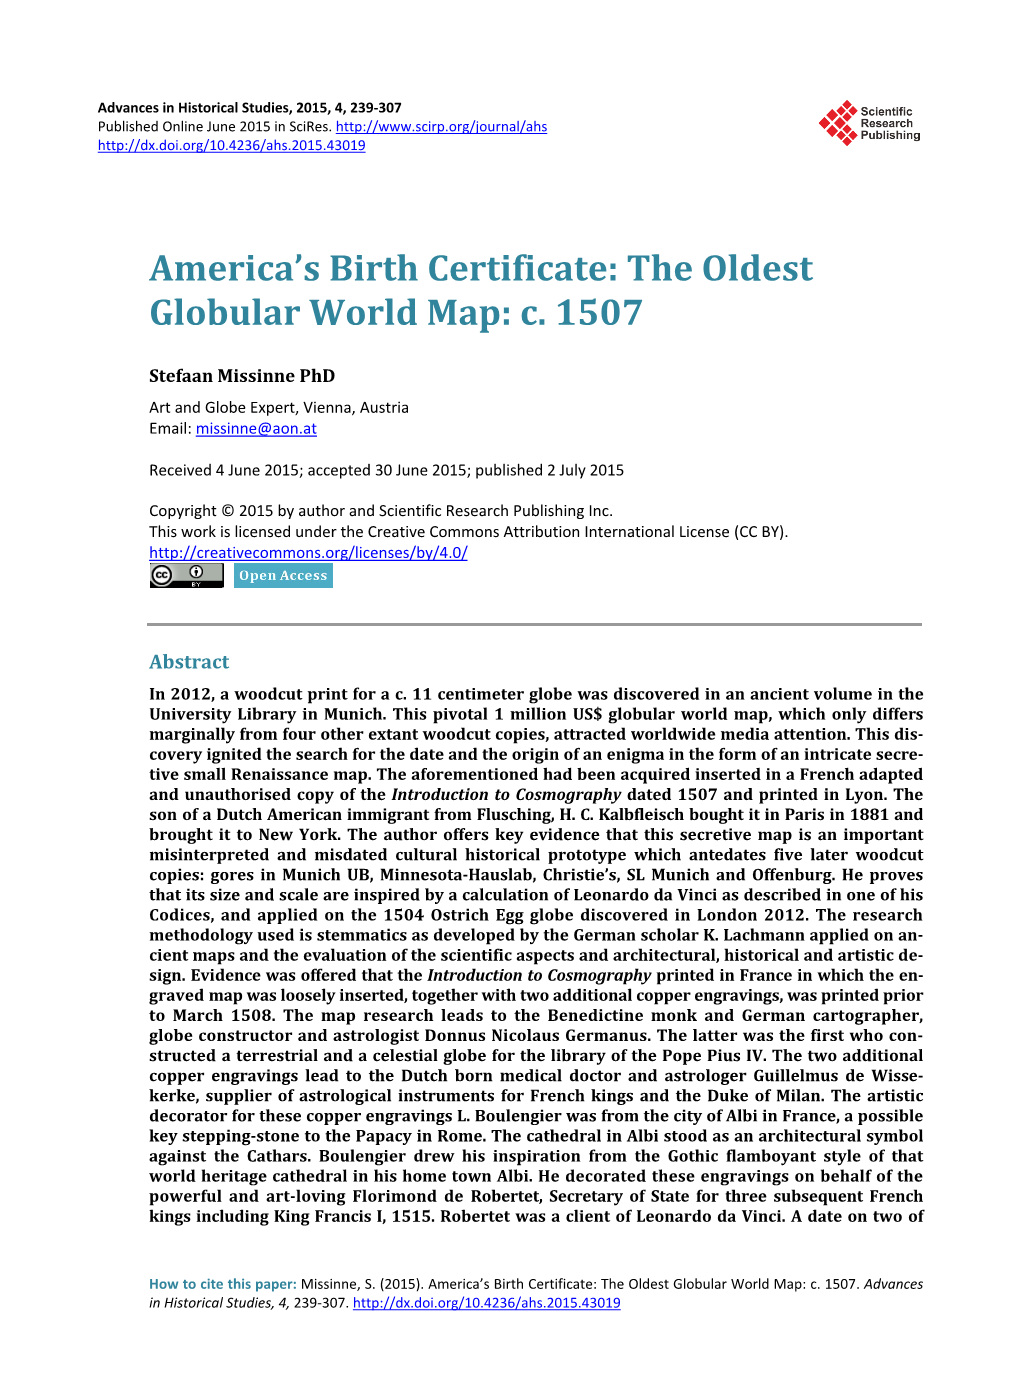 America's Birth Certificate: the Oldest Globular World Map: C. 1507